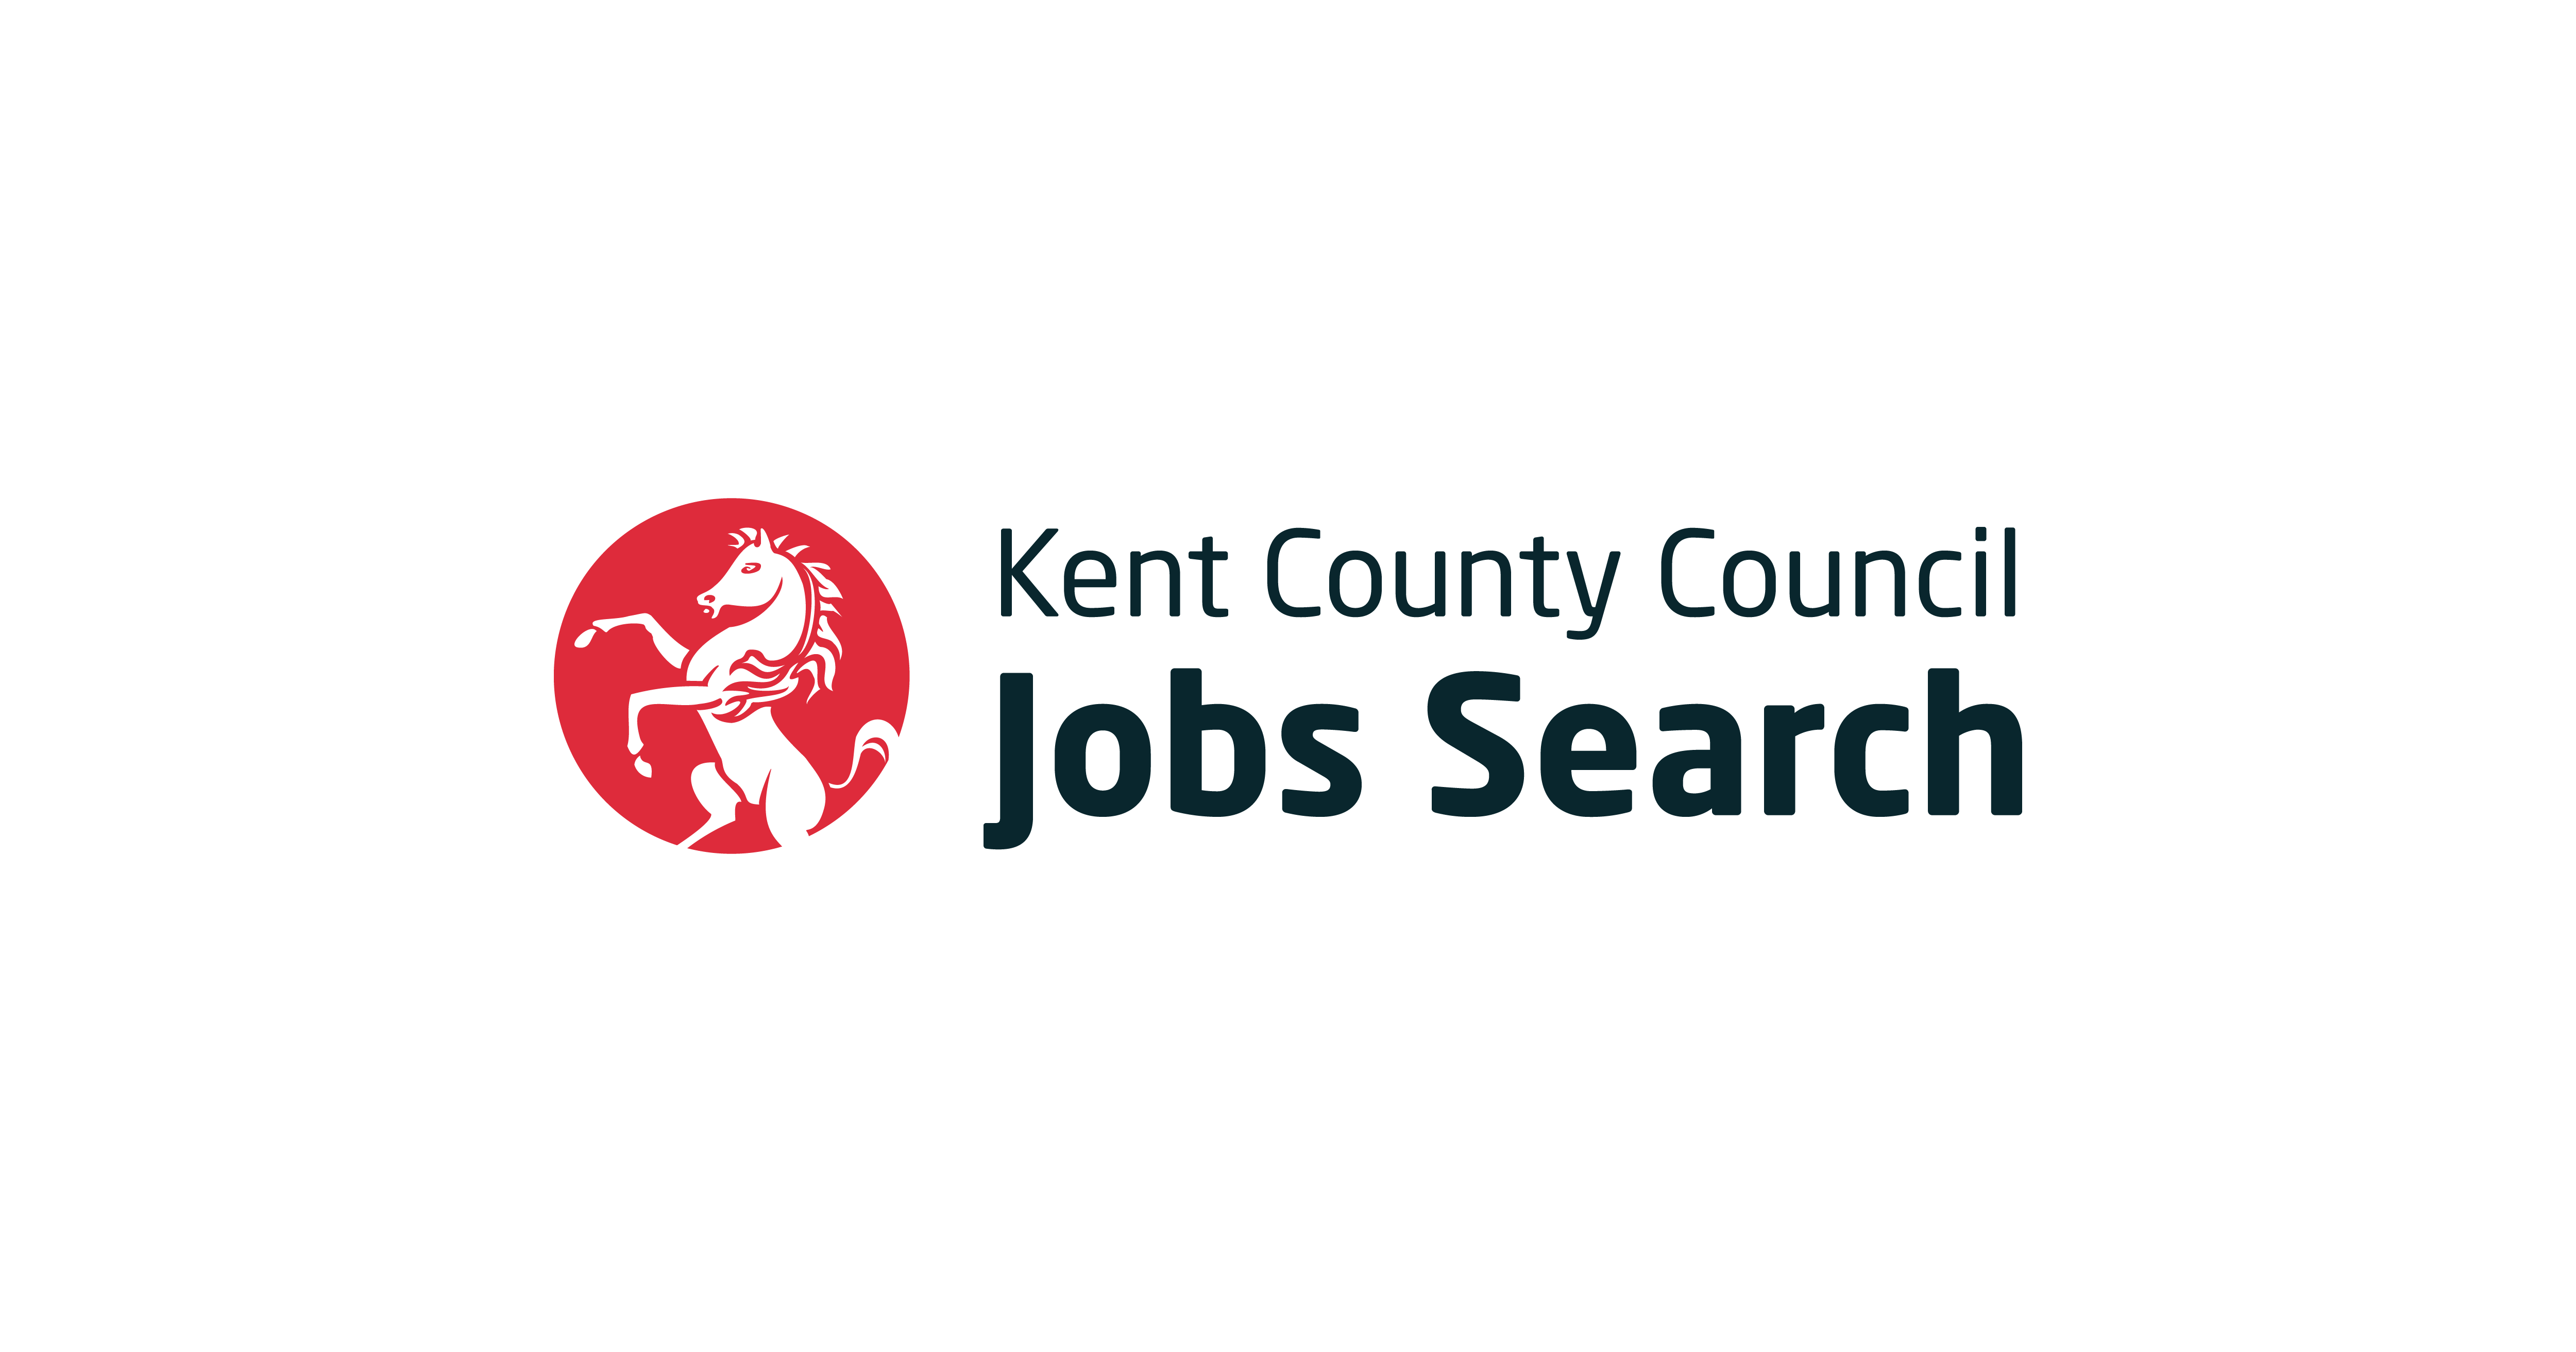 education jobs kent county council